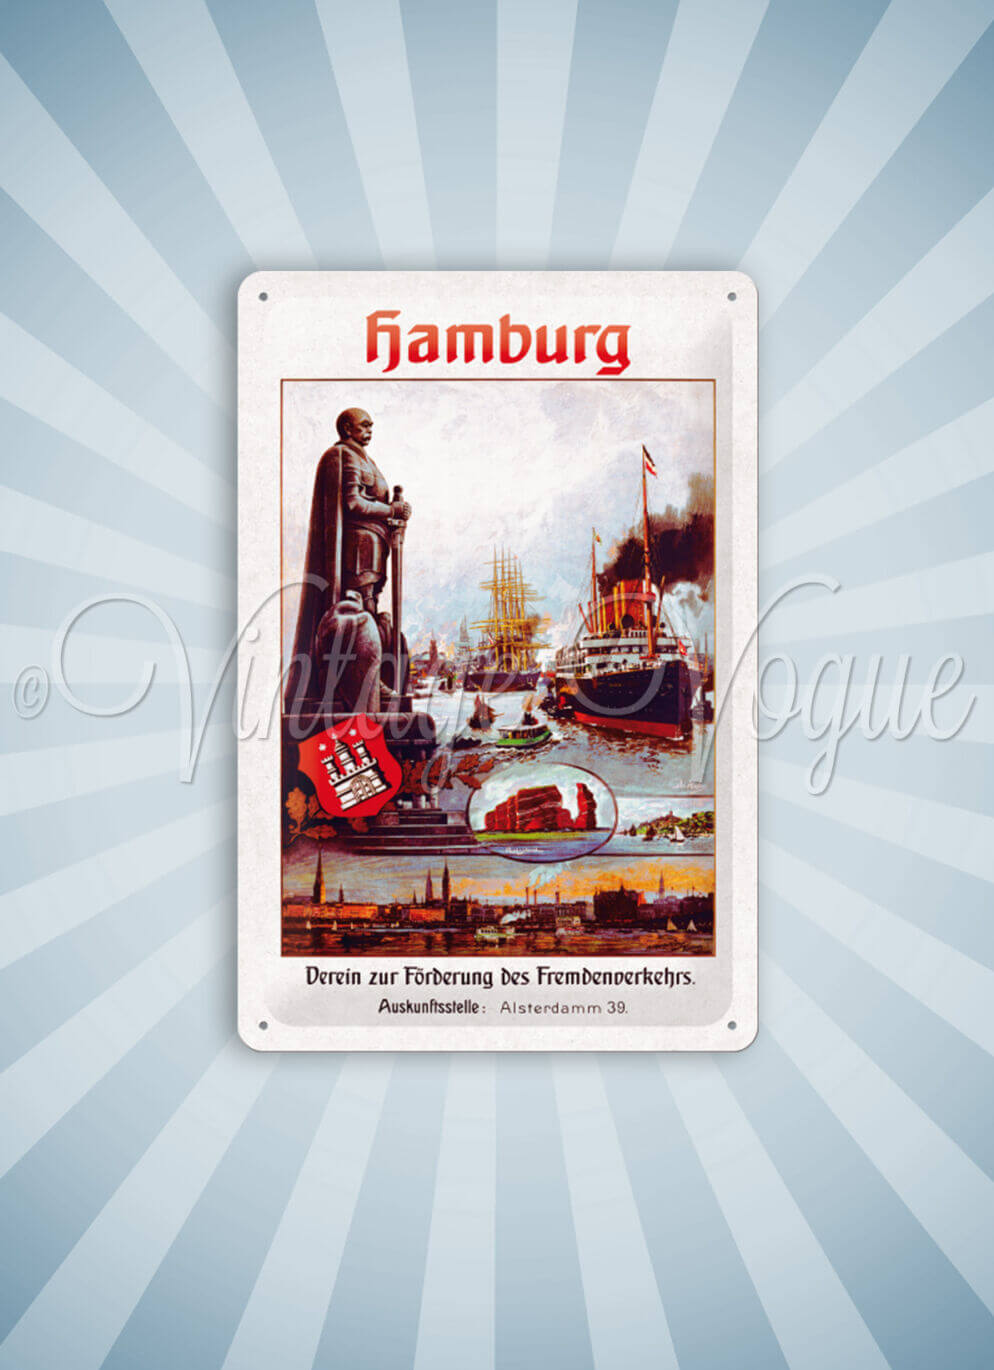 Nostalgic Art Retro Blechpostkarte "Hamburg Nostalgie - Fremdenverkehr"